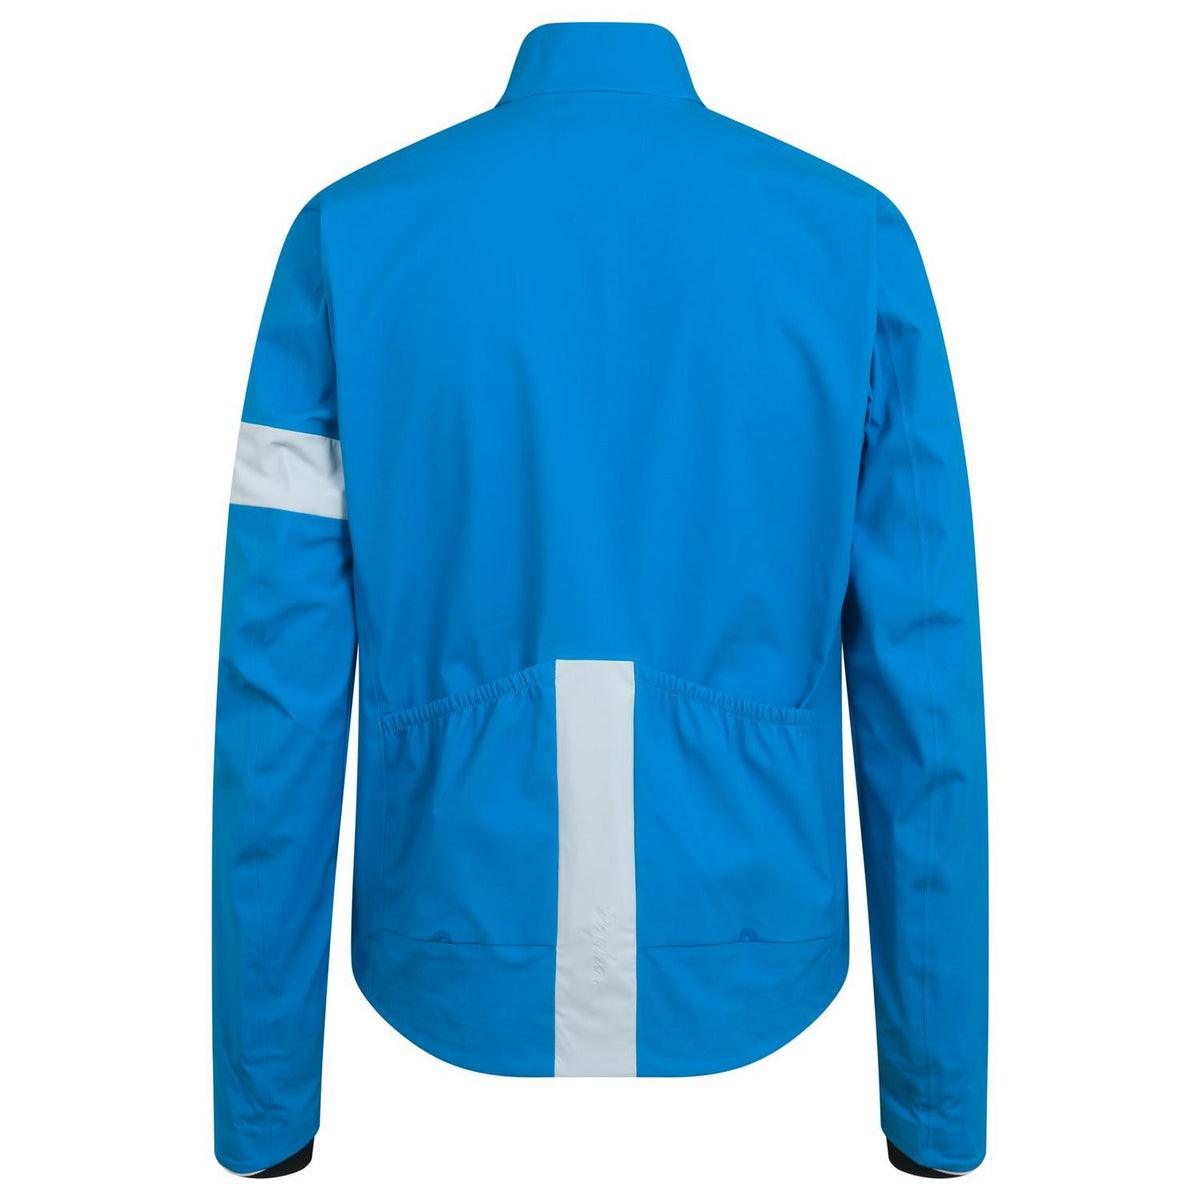 Rapha Classic GORE-TEX Winter Jacket